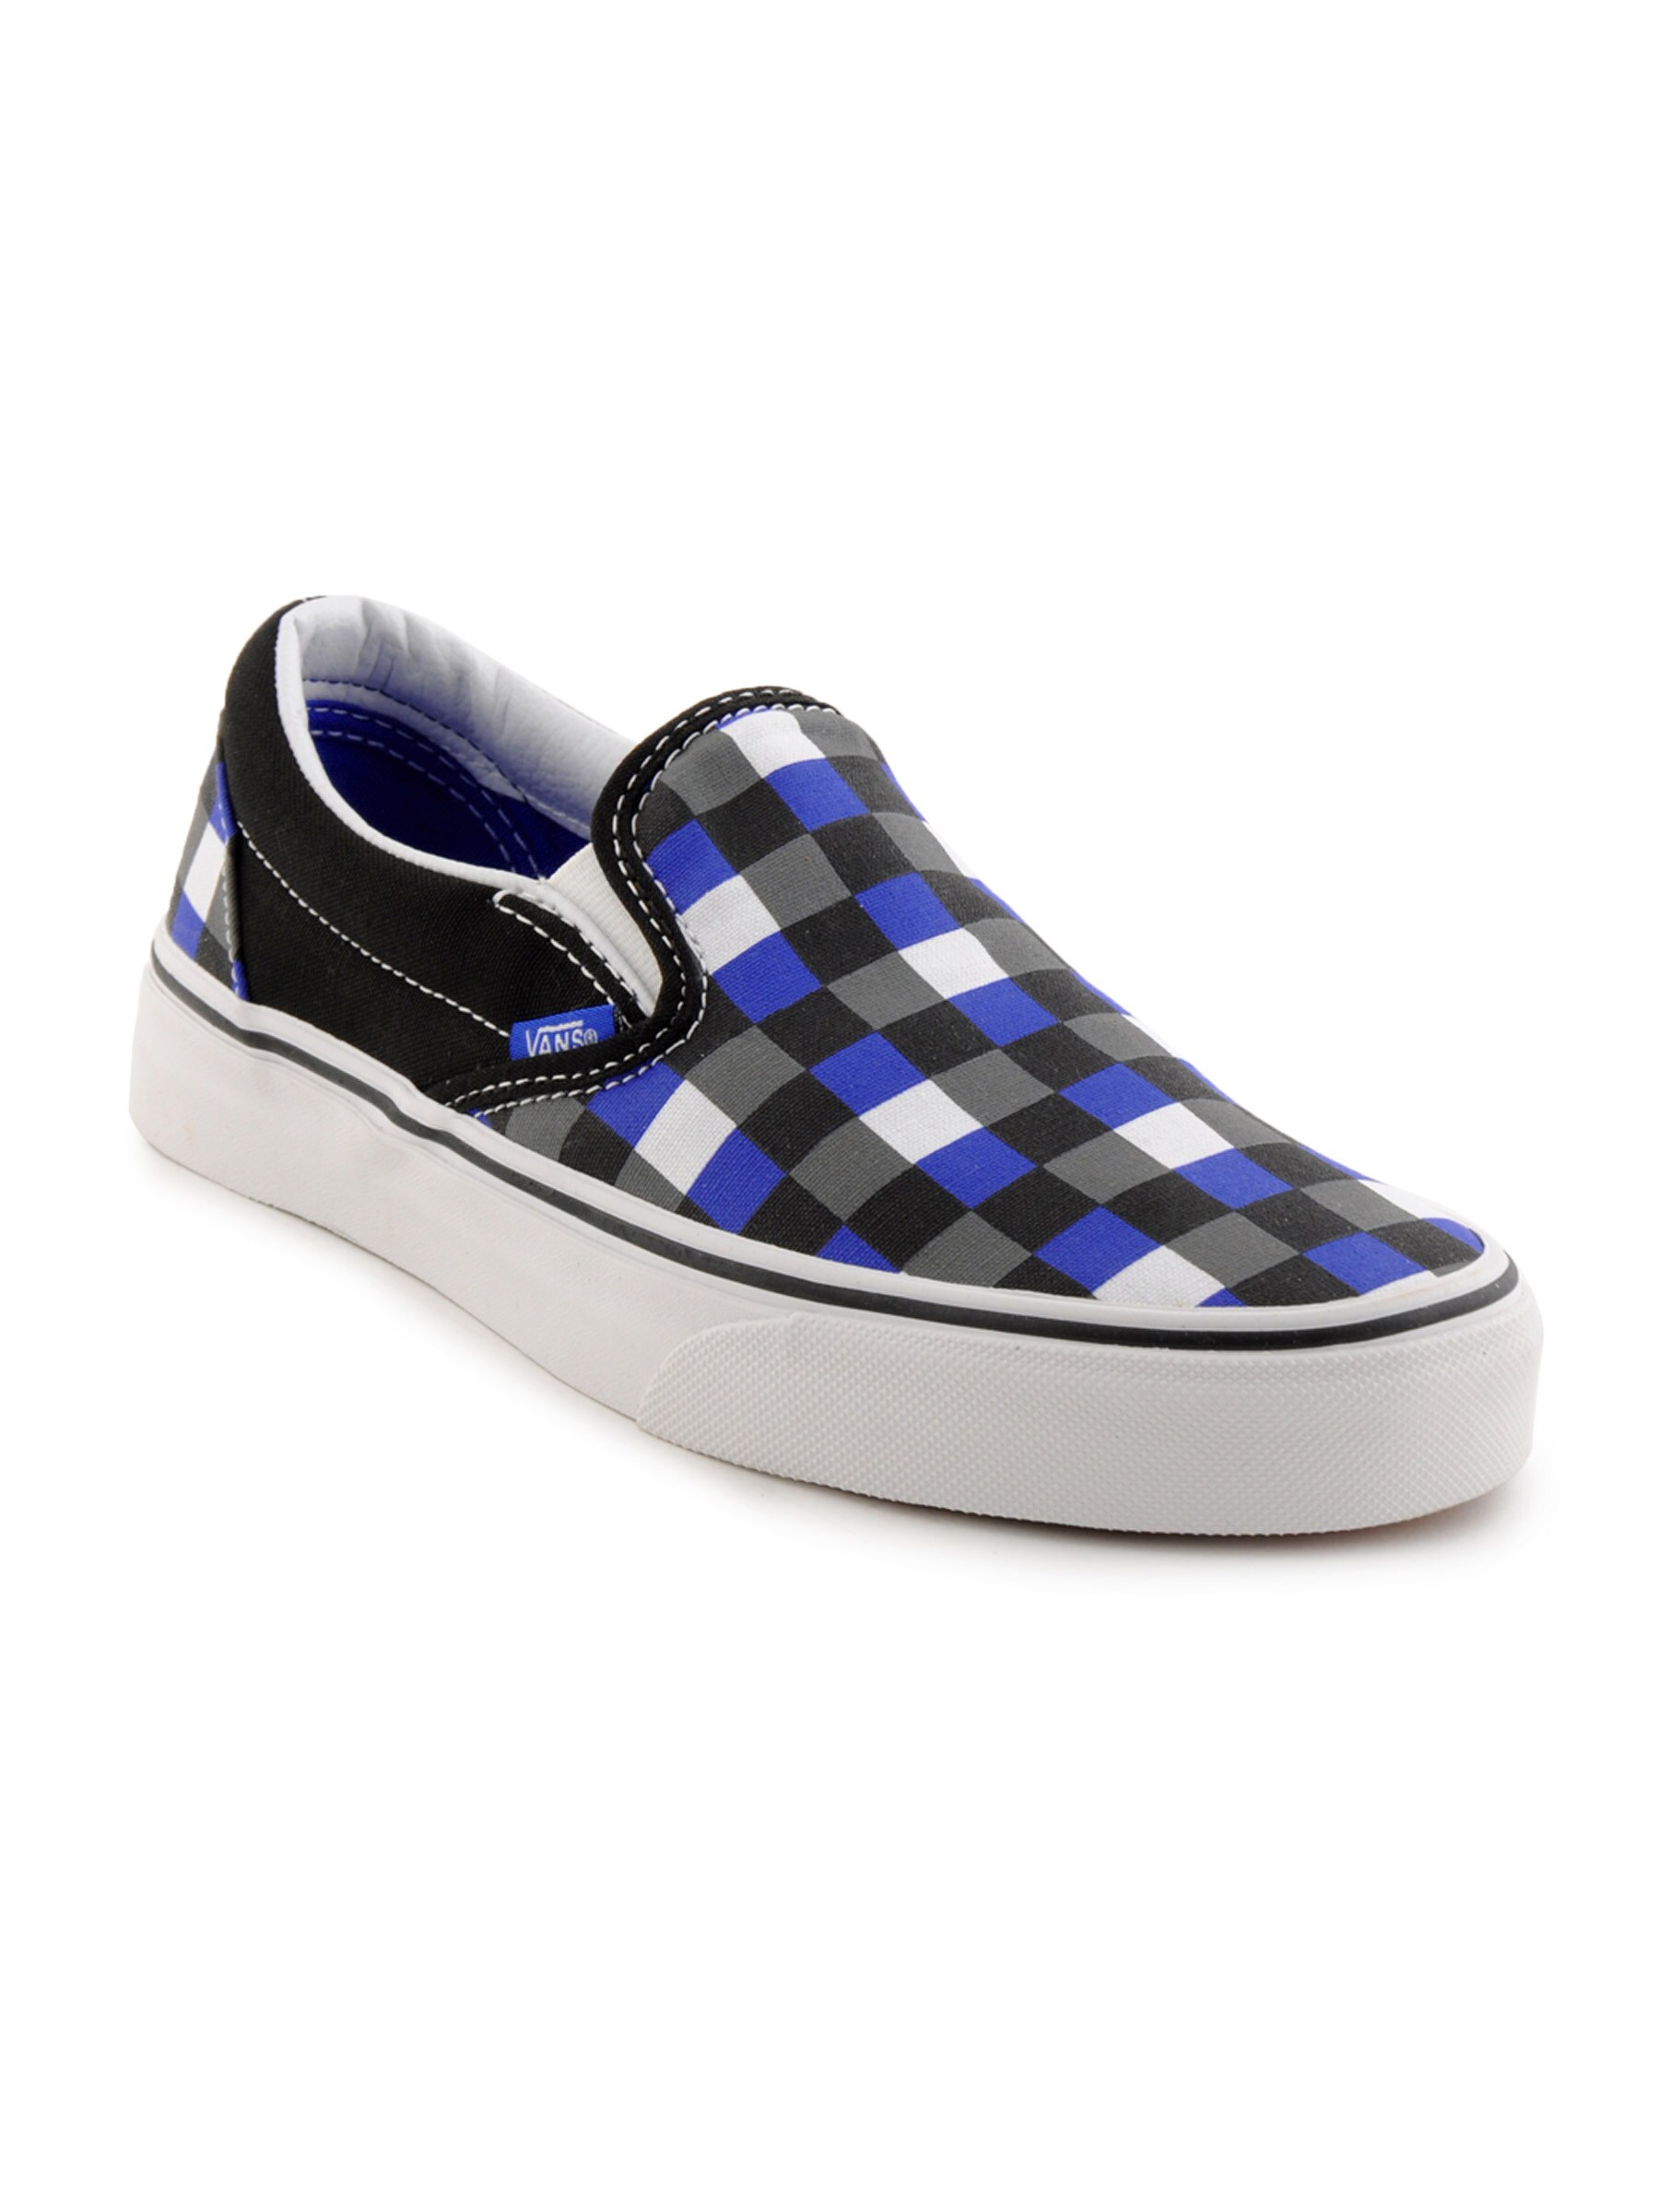 Vans Unisex Classic Slip-On Blue Casual Shoes